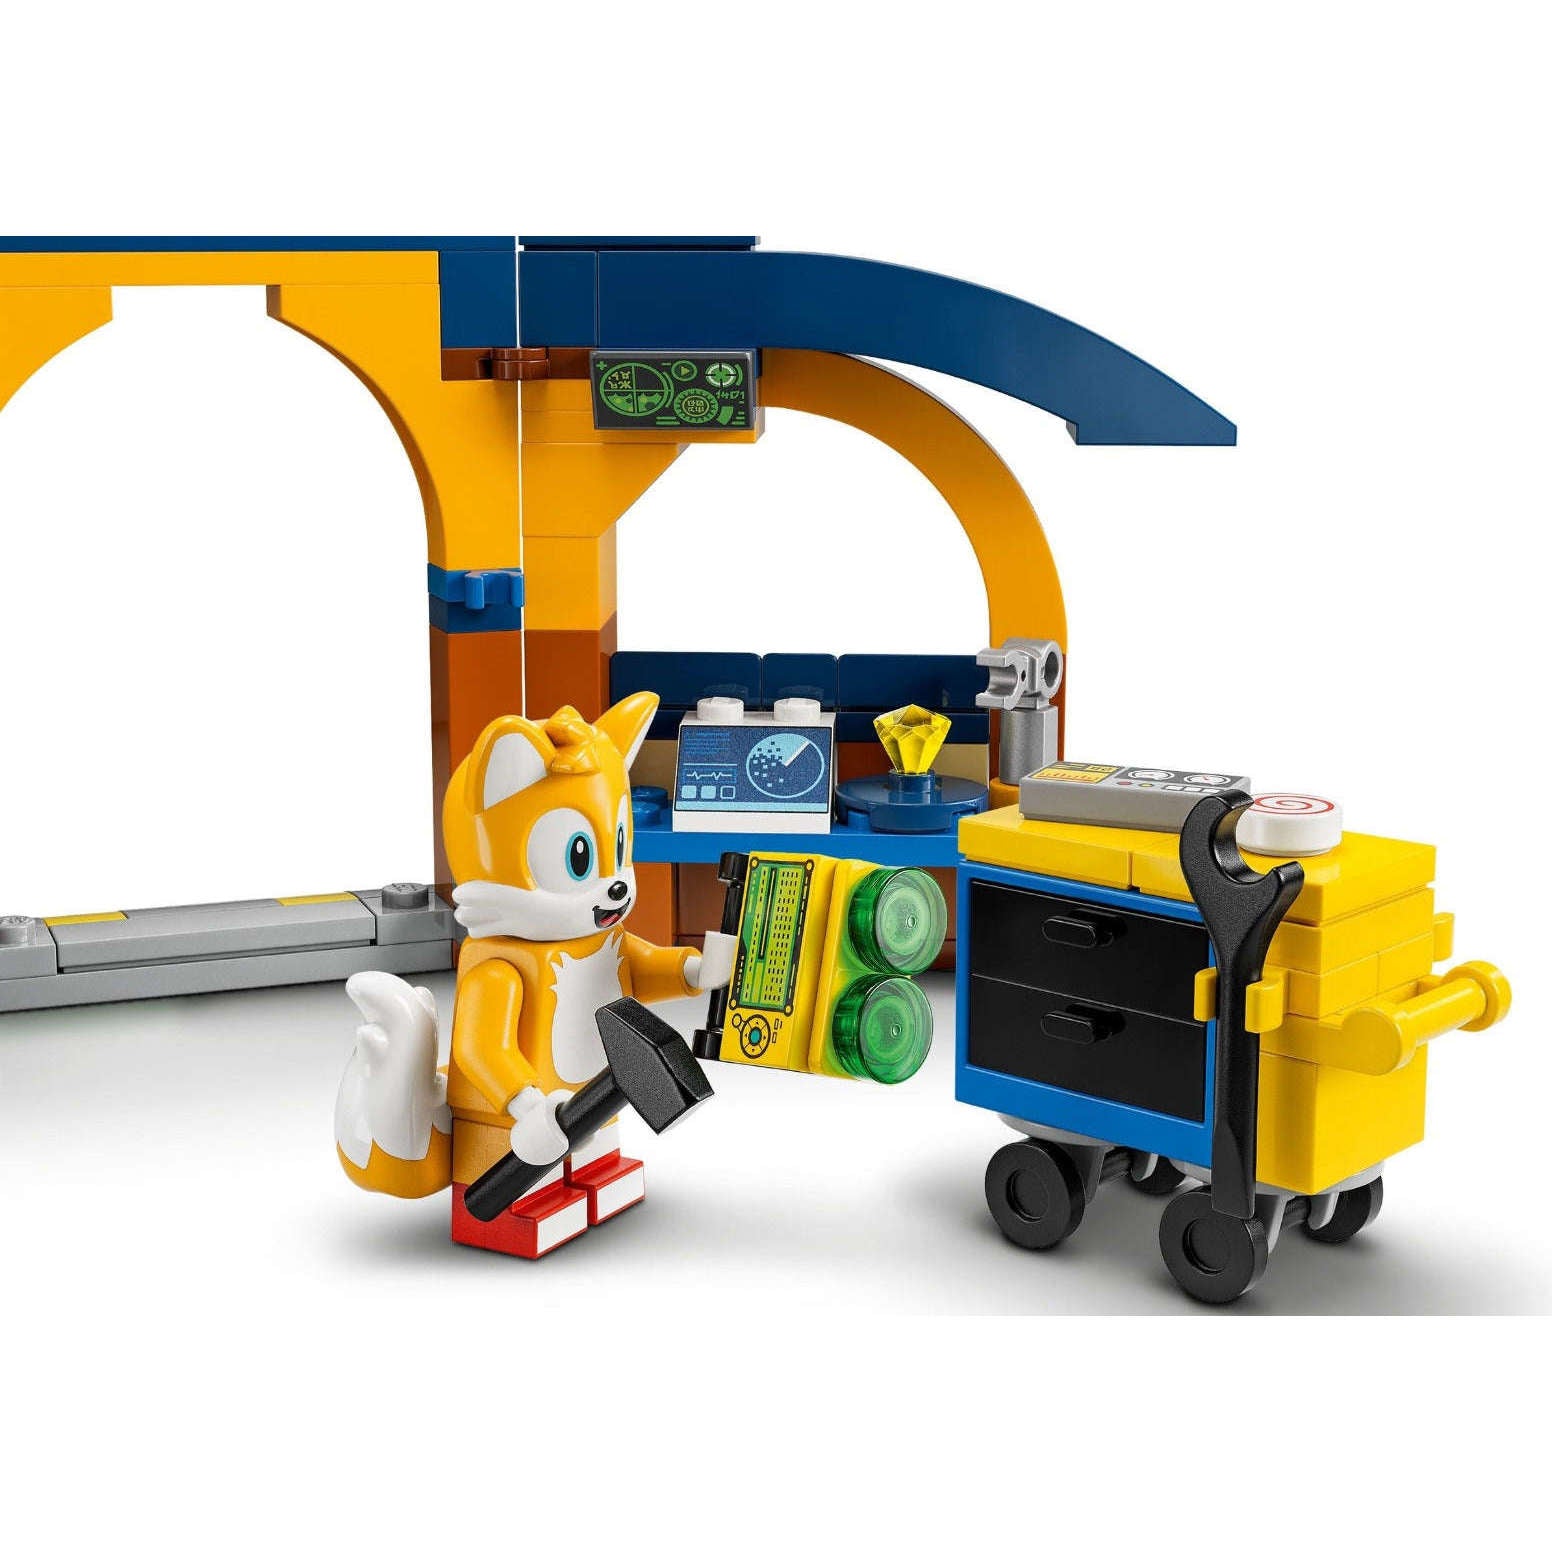 Lego 76991 Sonic The Hedgehog Tails' Workshop and Tornado Plane